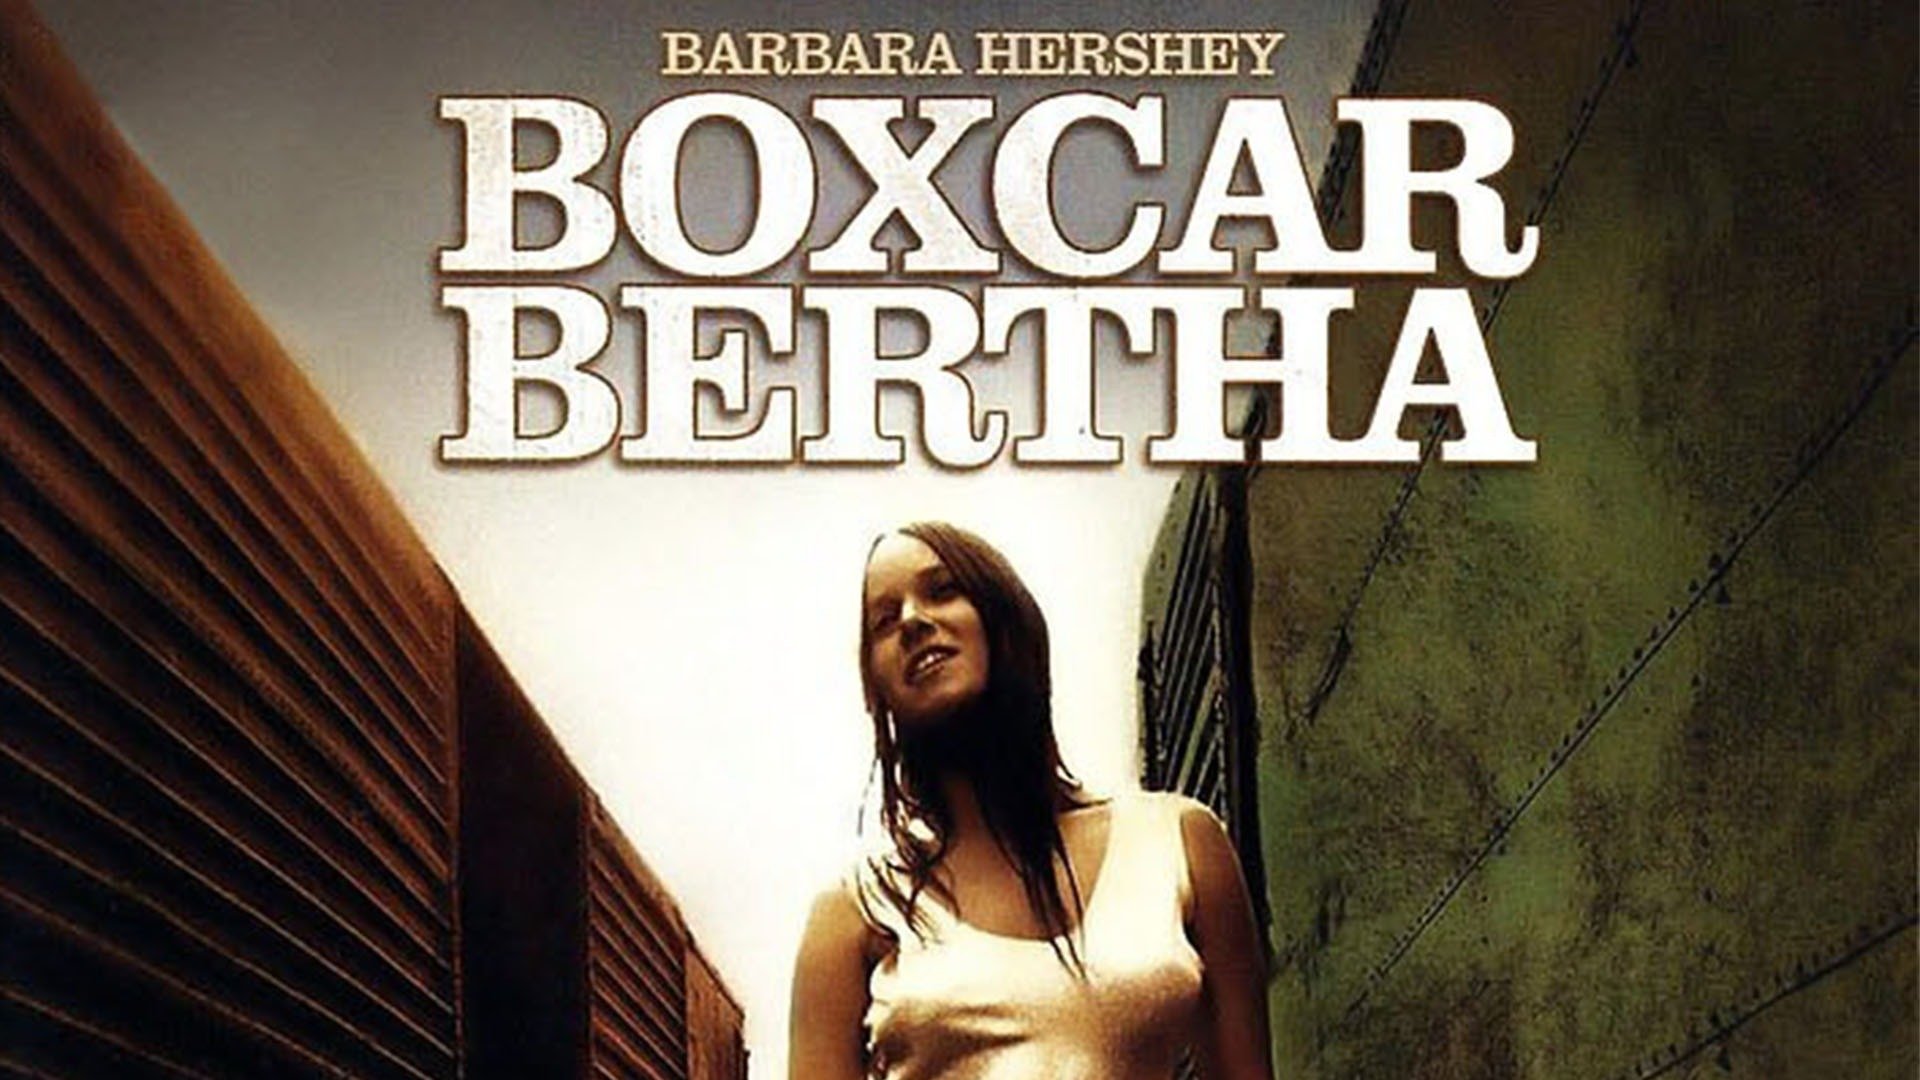 Barbara hershey sexy